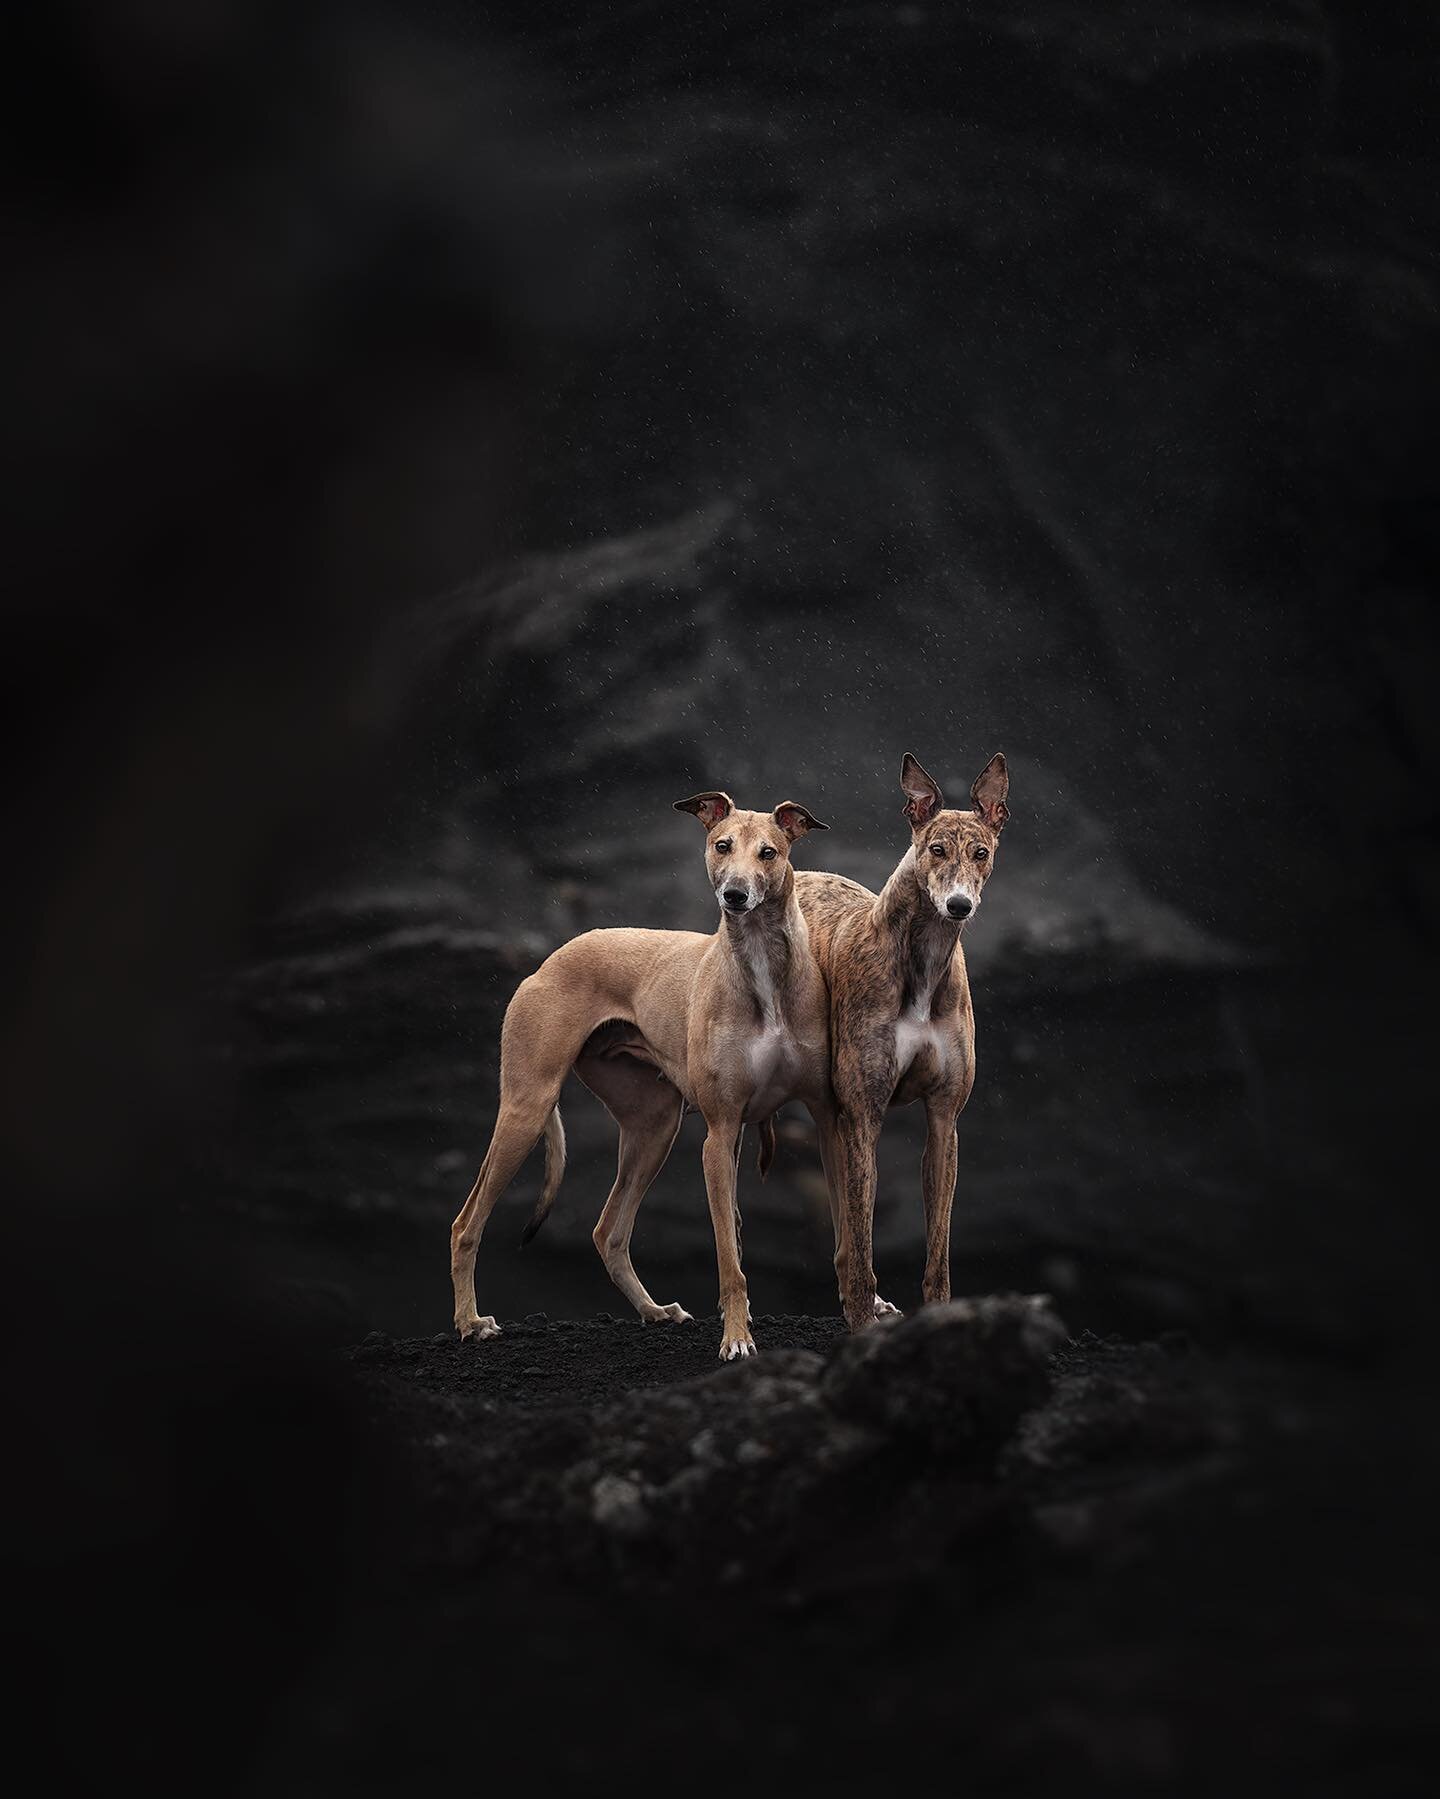 📸 @ve.shandor.photo

#greyhound #greyhounds #greyhound_feature #greyhoundlove #greyhoundlife #greyhoundcorner #greyhoundofinstagram #hound #houndsofinstagram #photography #photooftheday #photographer #sunset #beach #blackbeach #icelandtravel #icelan